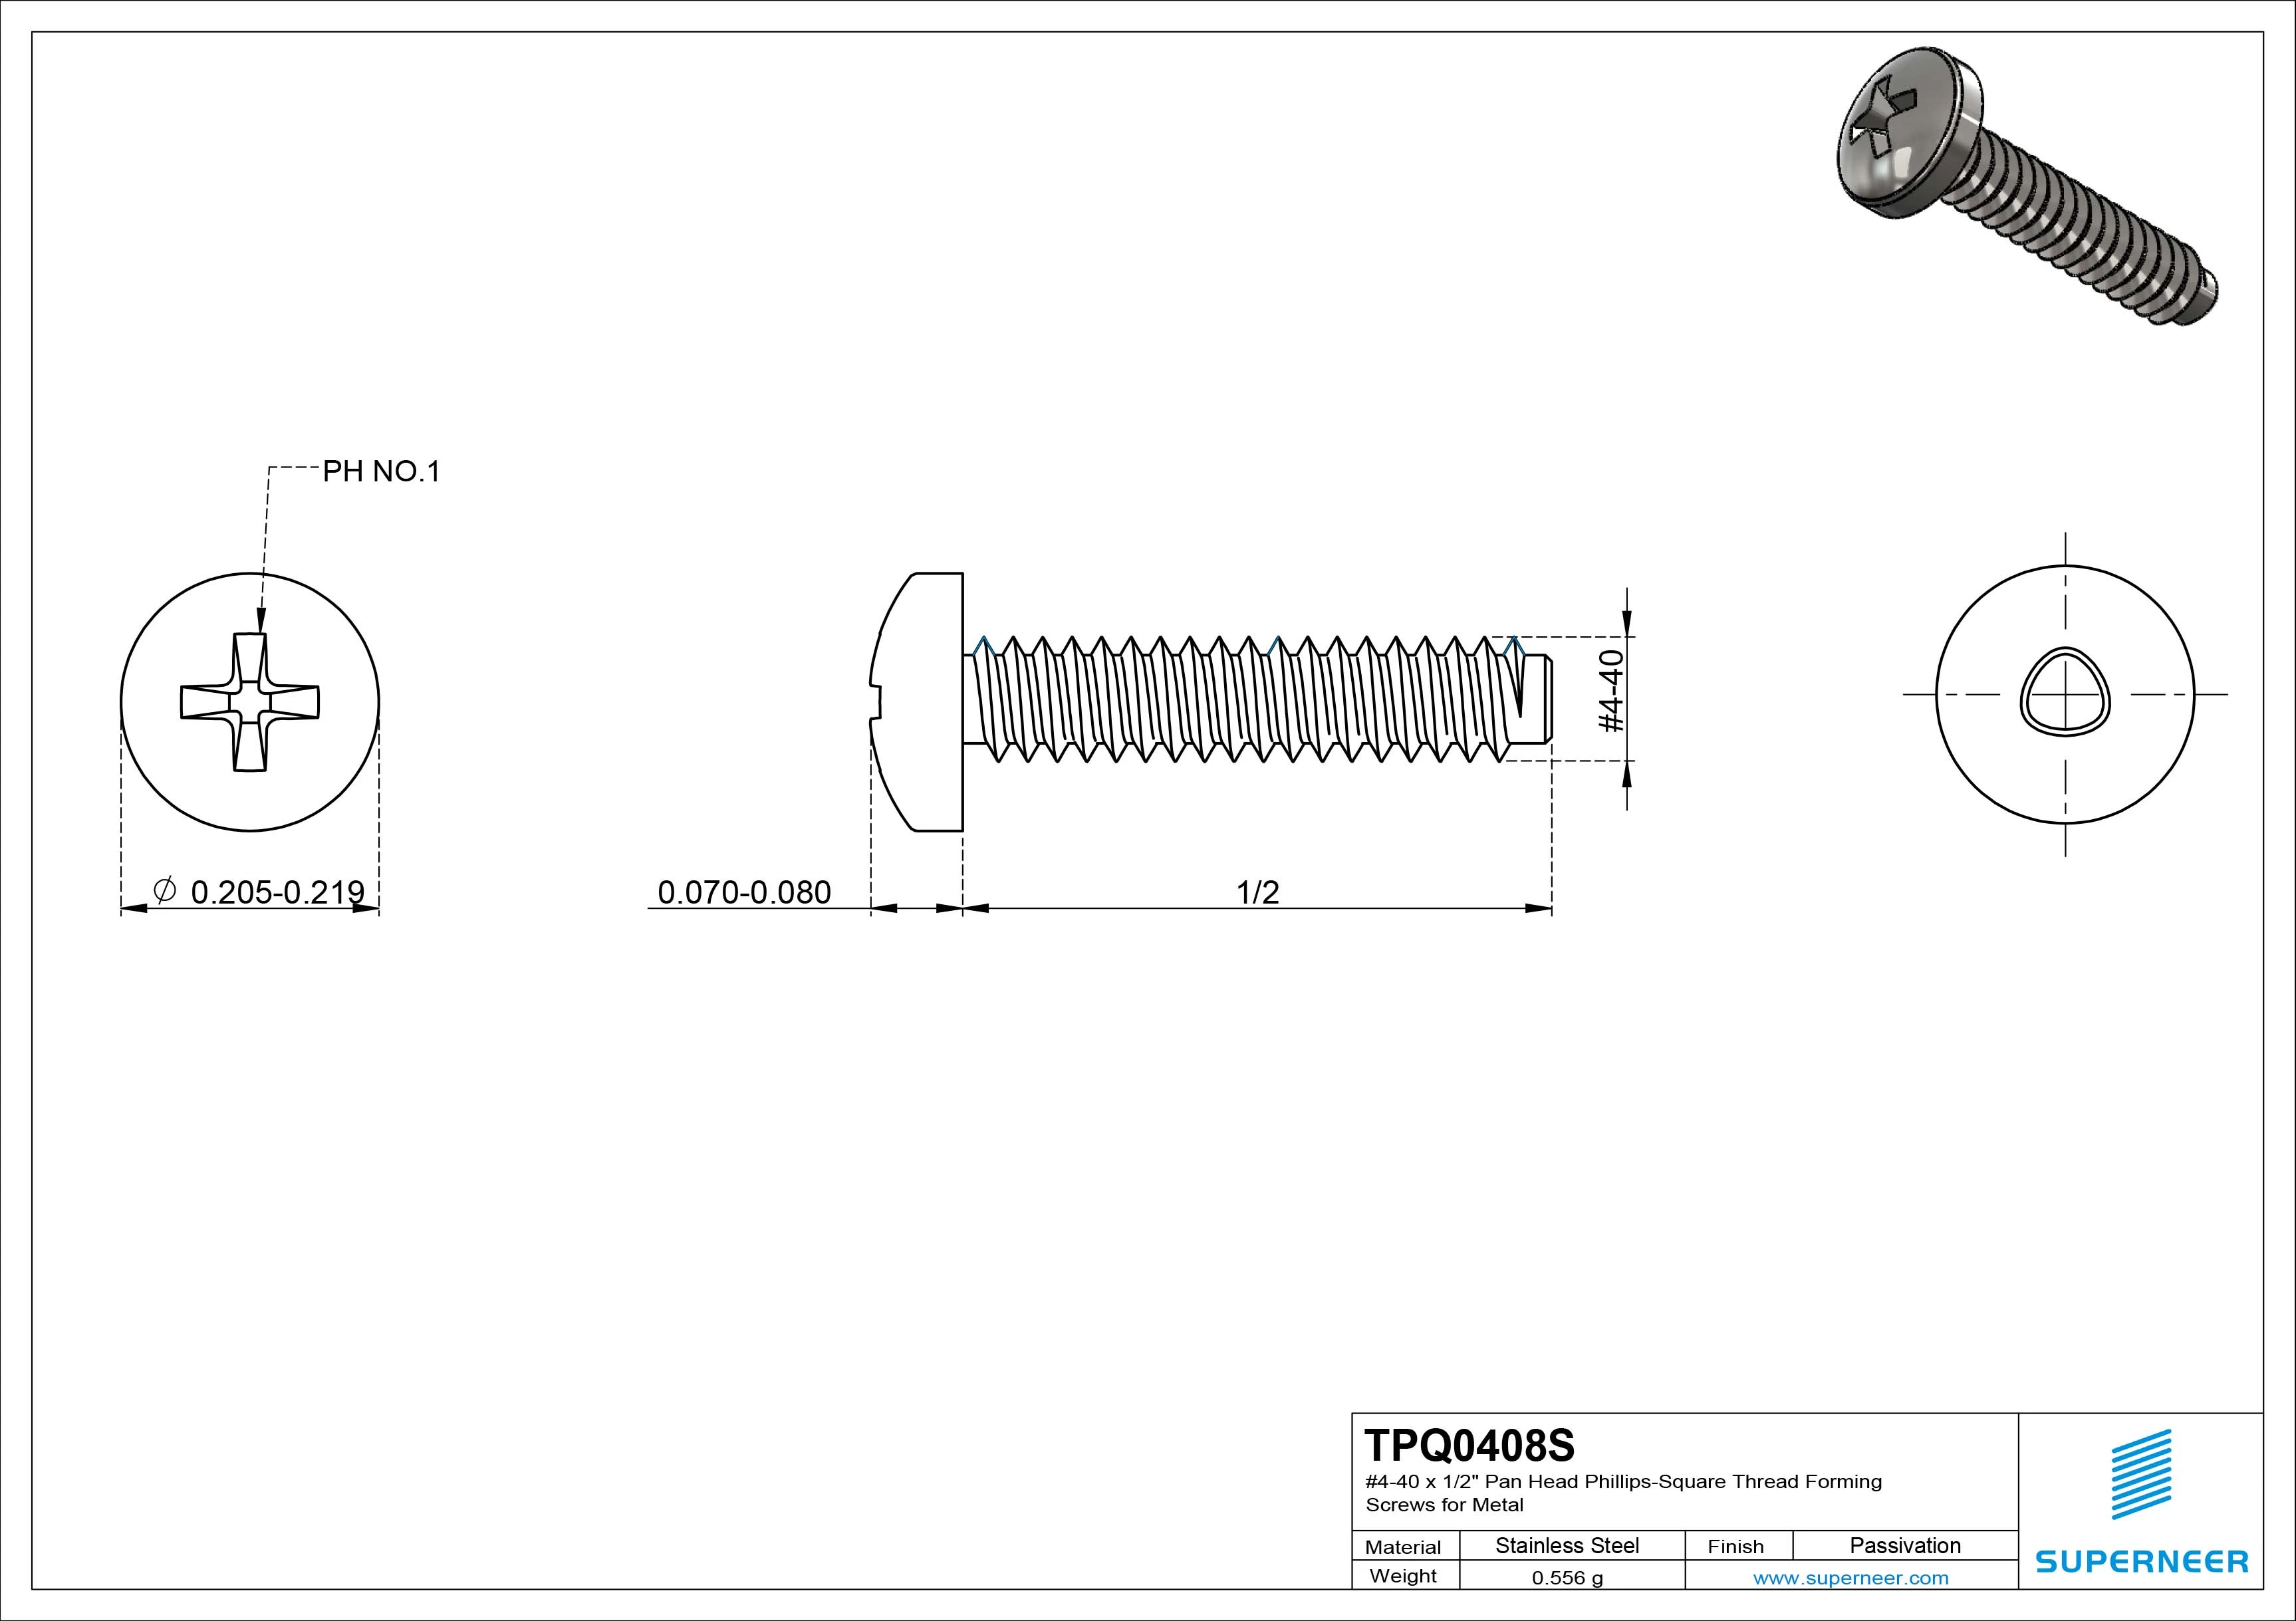 4-40 × 1/2 Pan Head Phillips Square Thread Forming  Screws for Metal  SUS304 Stainless Steel Inox